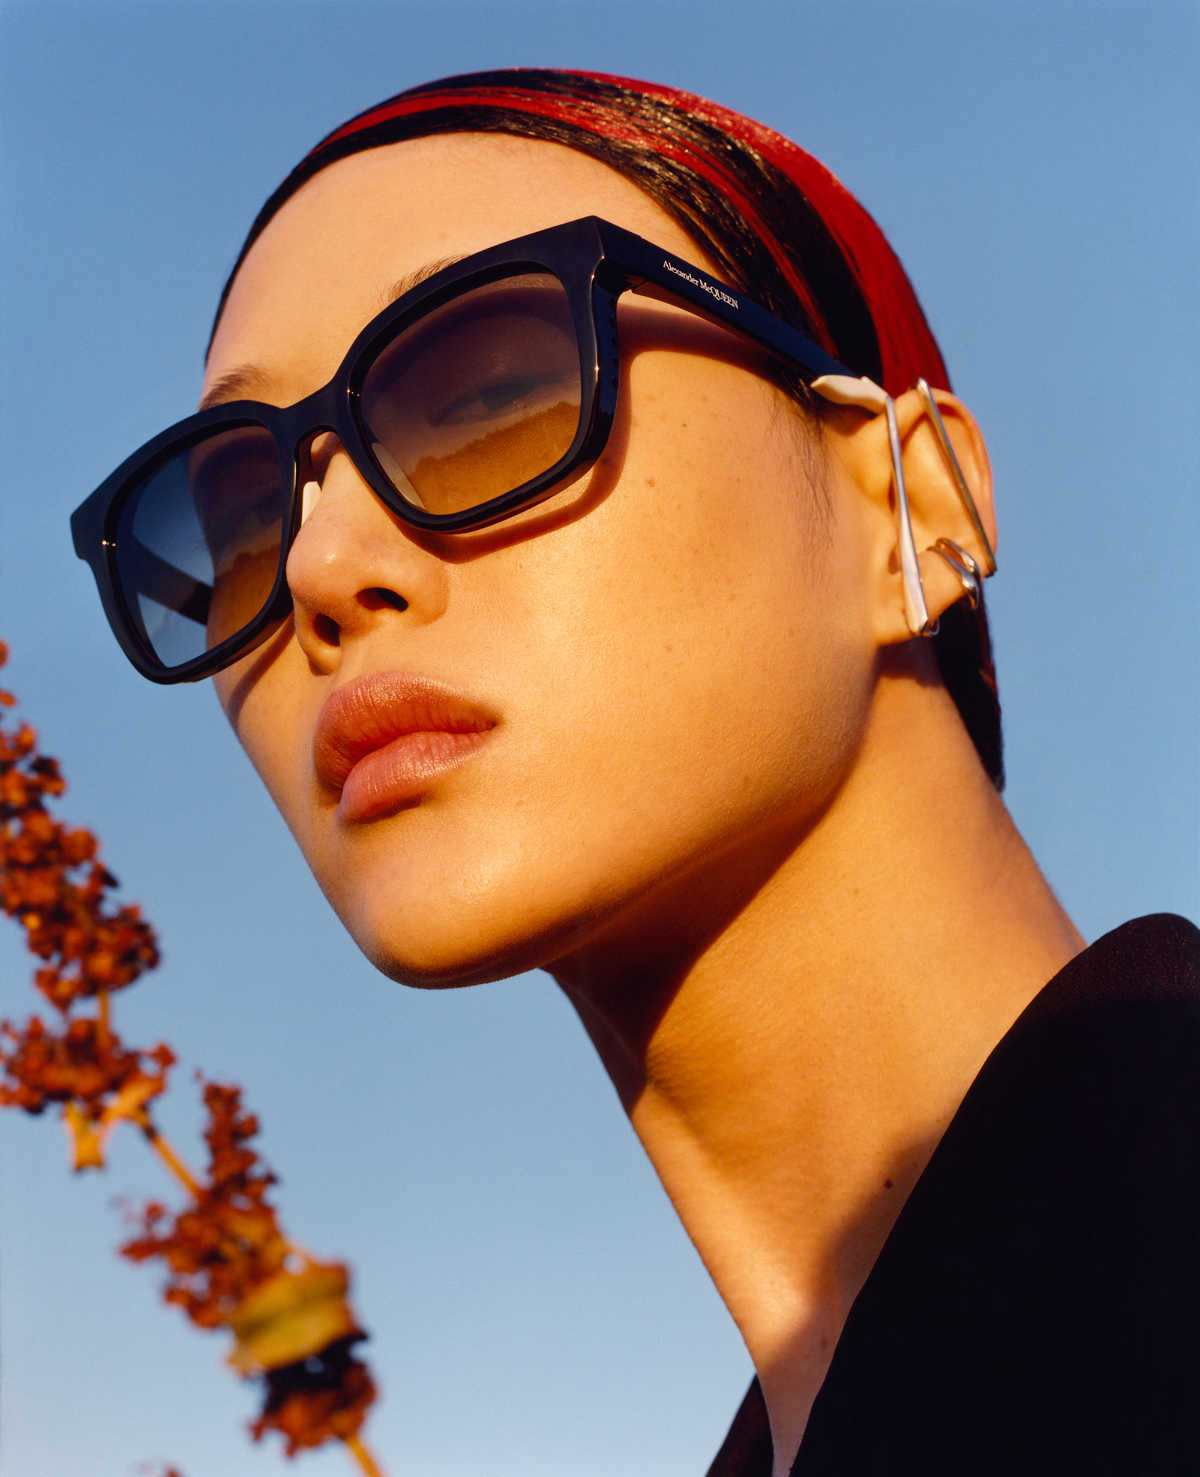 The Alexander McQueen Autumn/Winter 2020 campaign featuring Anok Yai, Sora Choi and Jill Kortleve